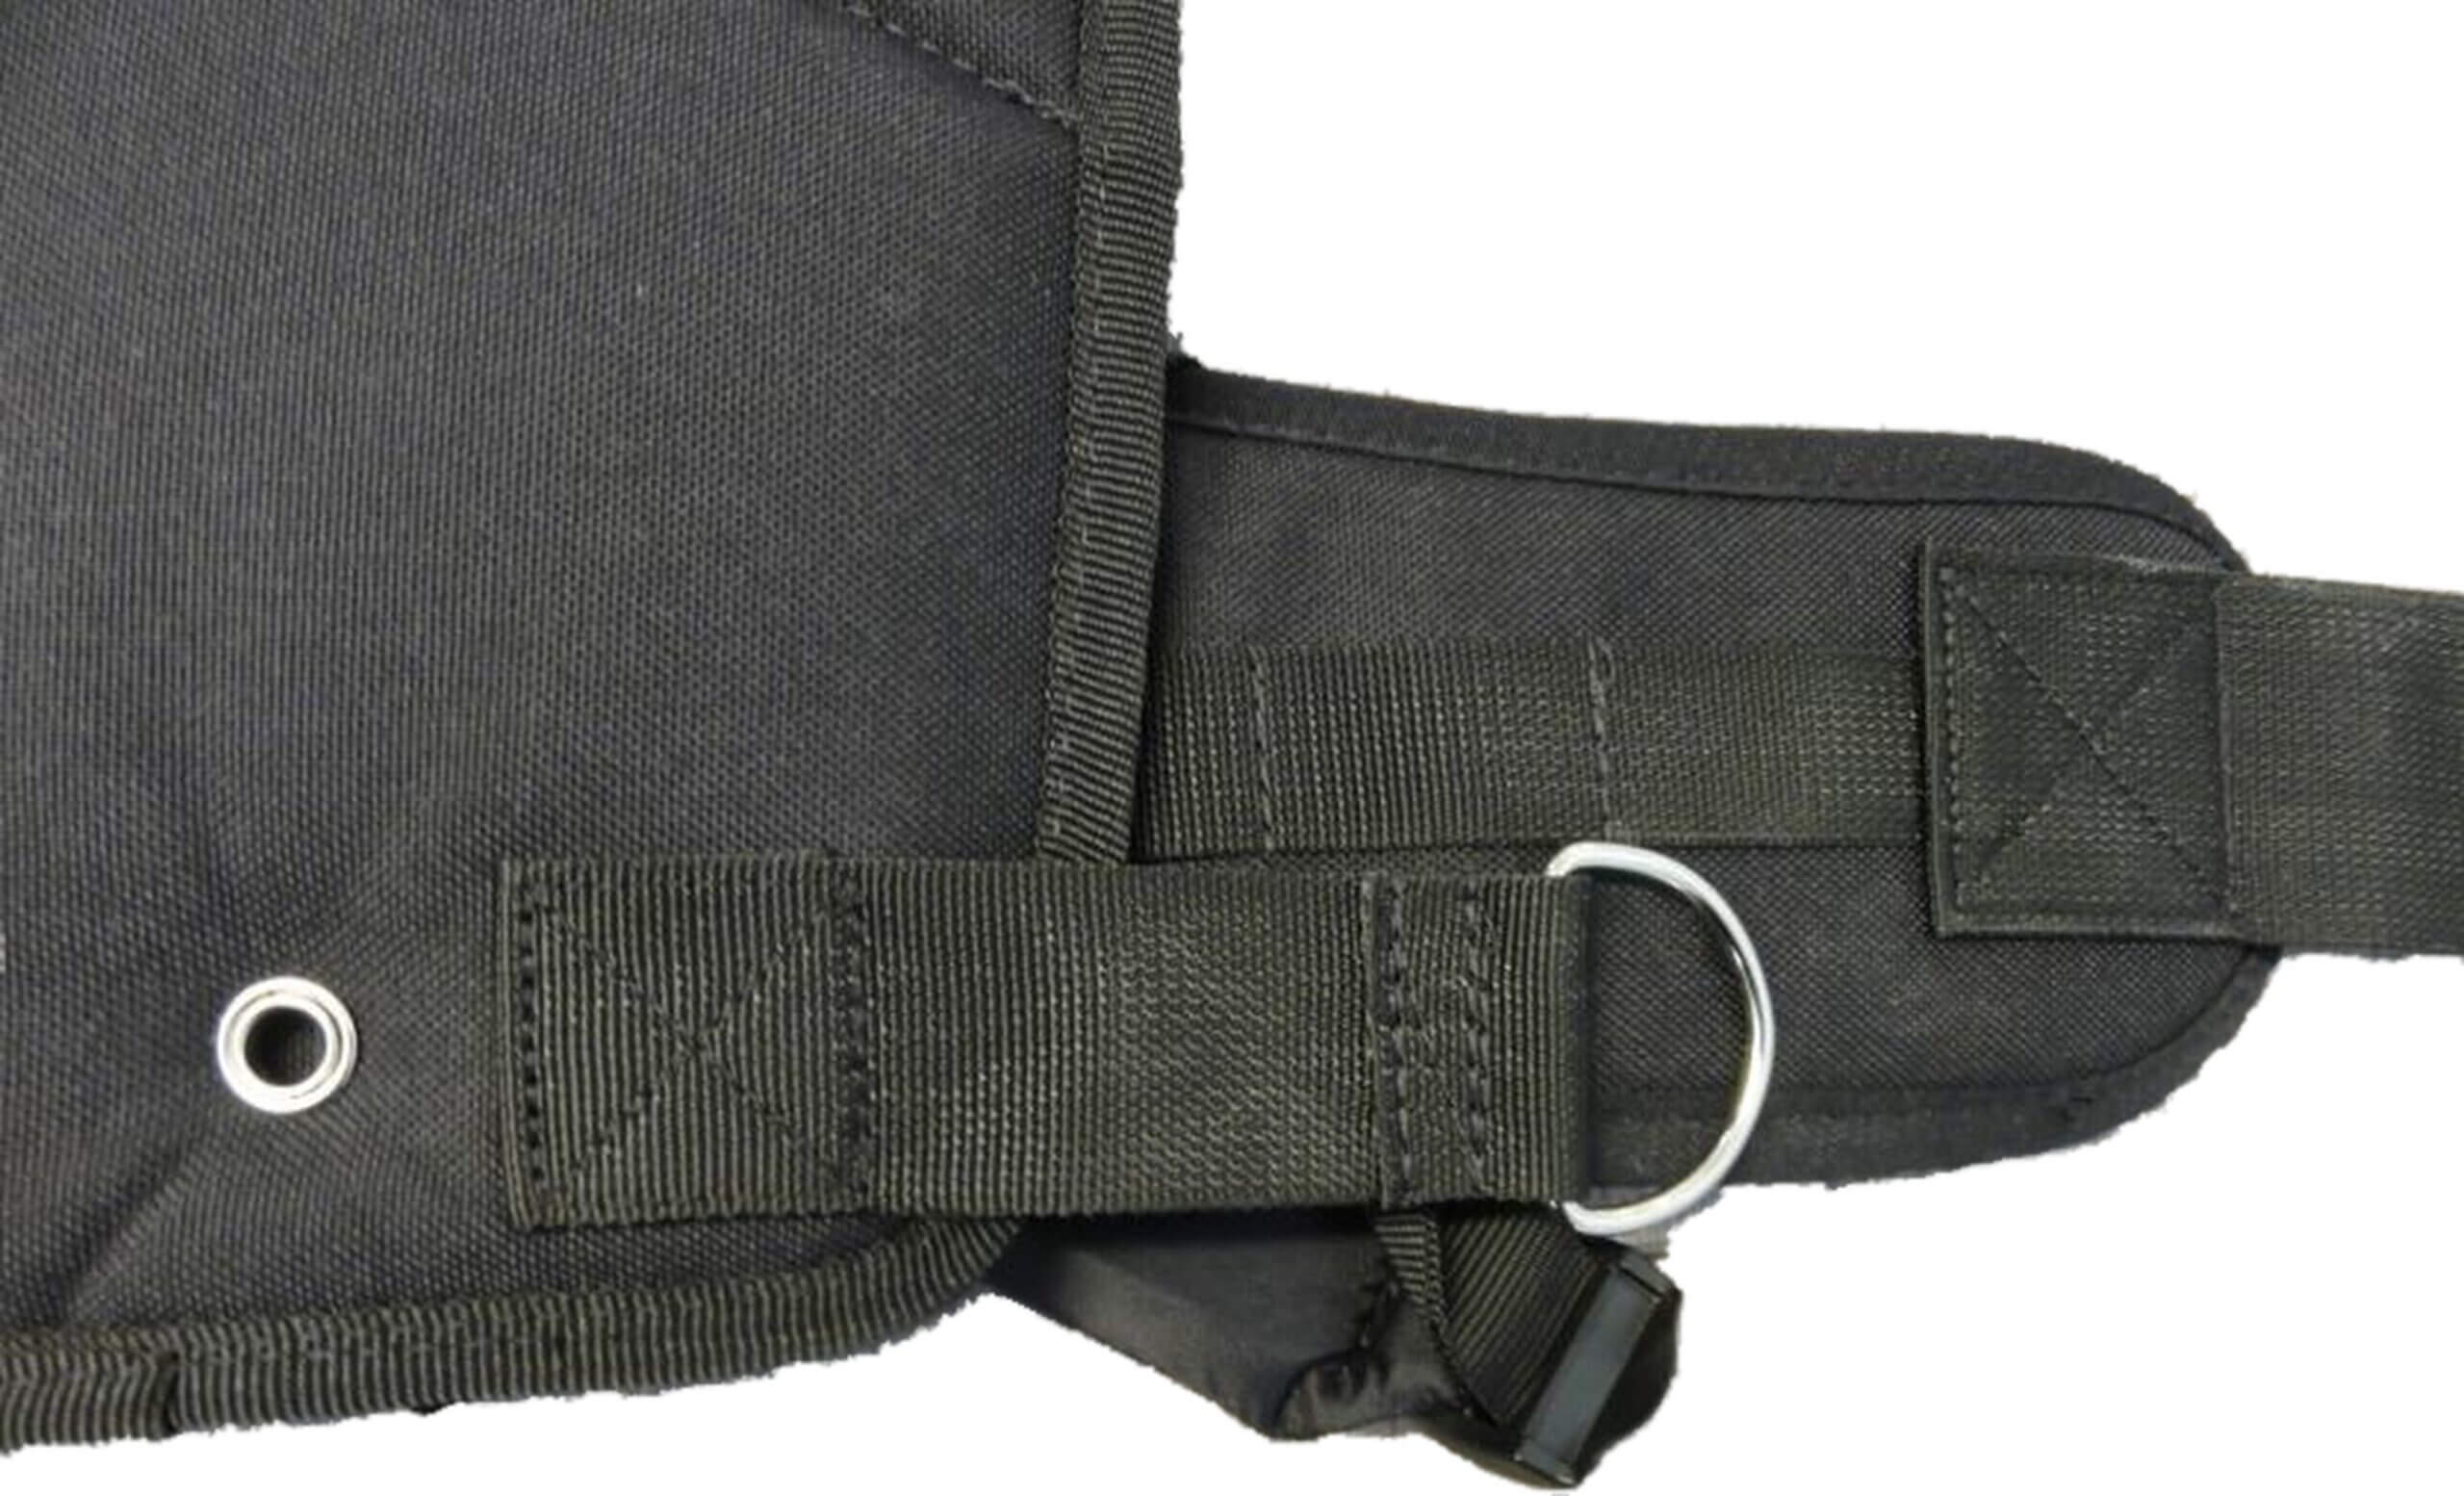 Chem-Lock® Ultimate Comfort Pro Backpack Sprayer 18L